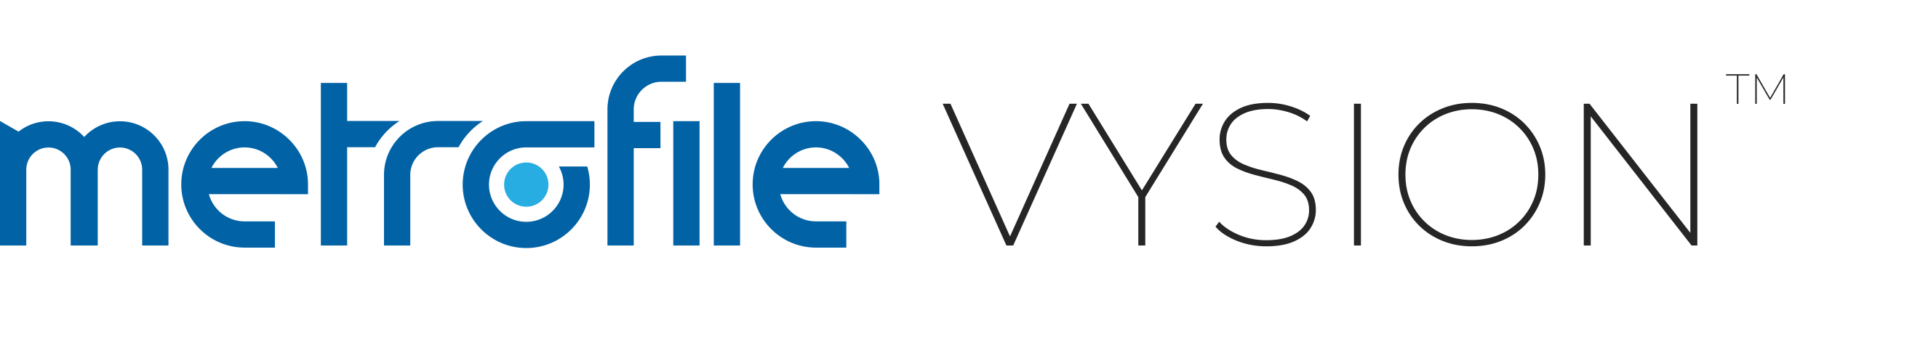 Metrofile-VYSION-logo